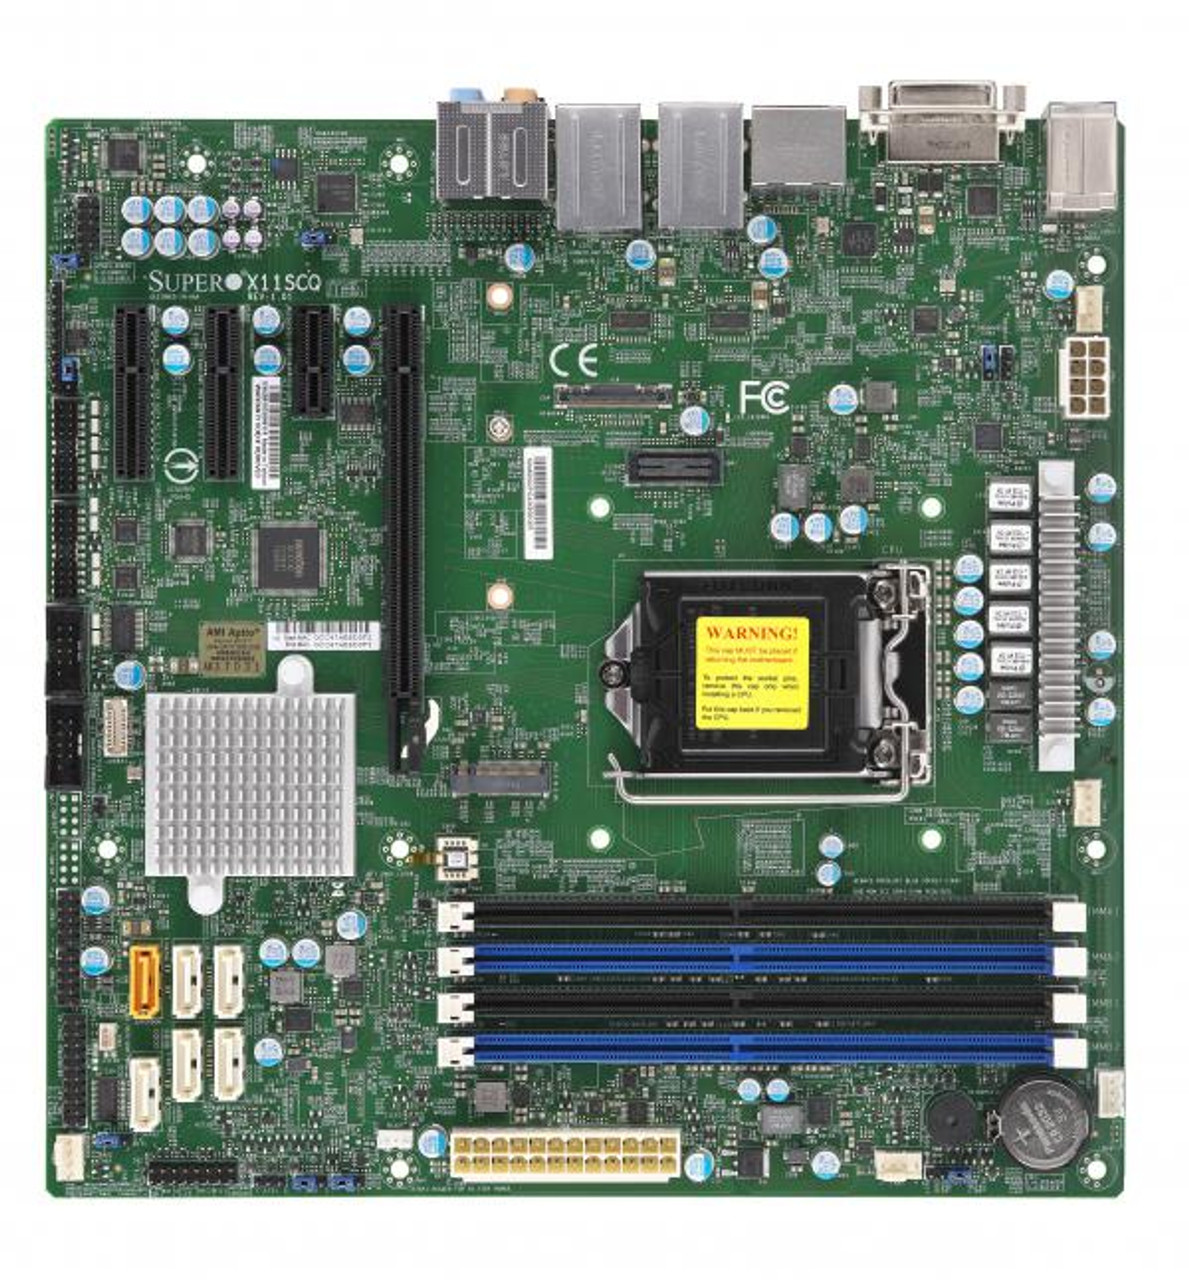 MBD-X11SCQ-O | Supermicro | X11SCQ Intel Q370 LGA 1151 (Socket H4) micro ATX